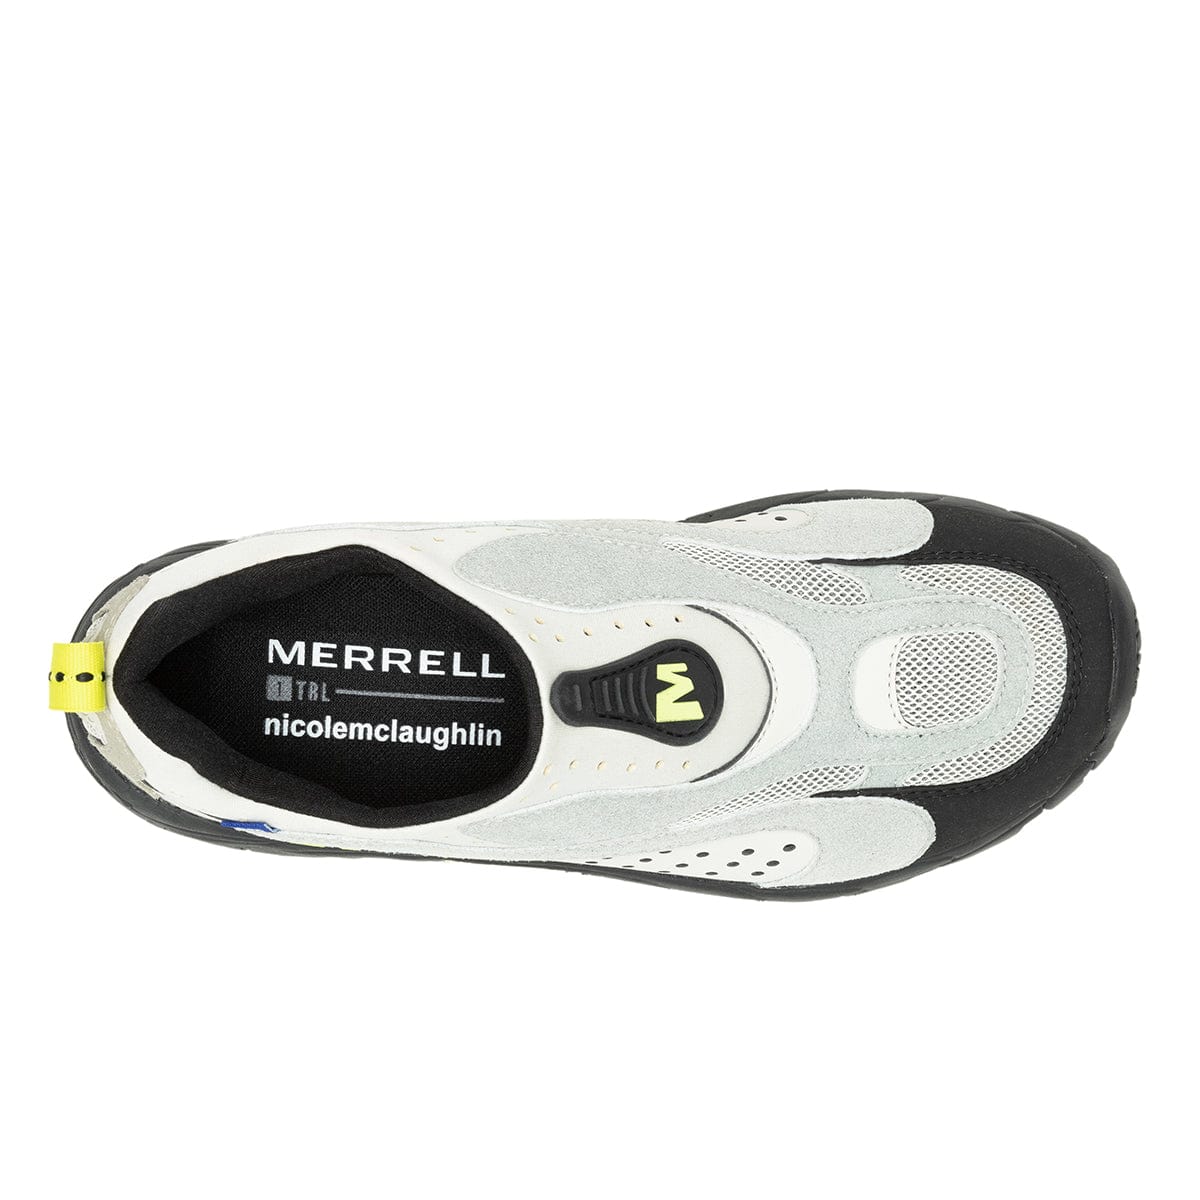 Merrell 1TRL Sneakers X NICOLE MCLAUGHLIN MOC SPEED STREAK EVO